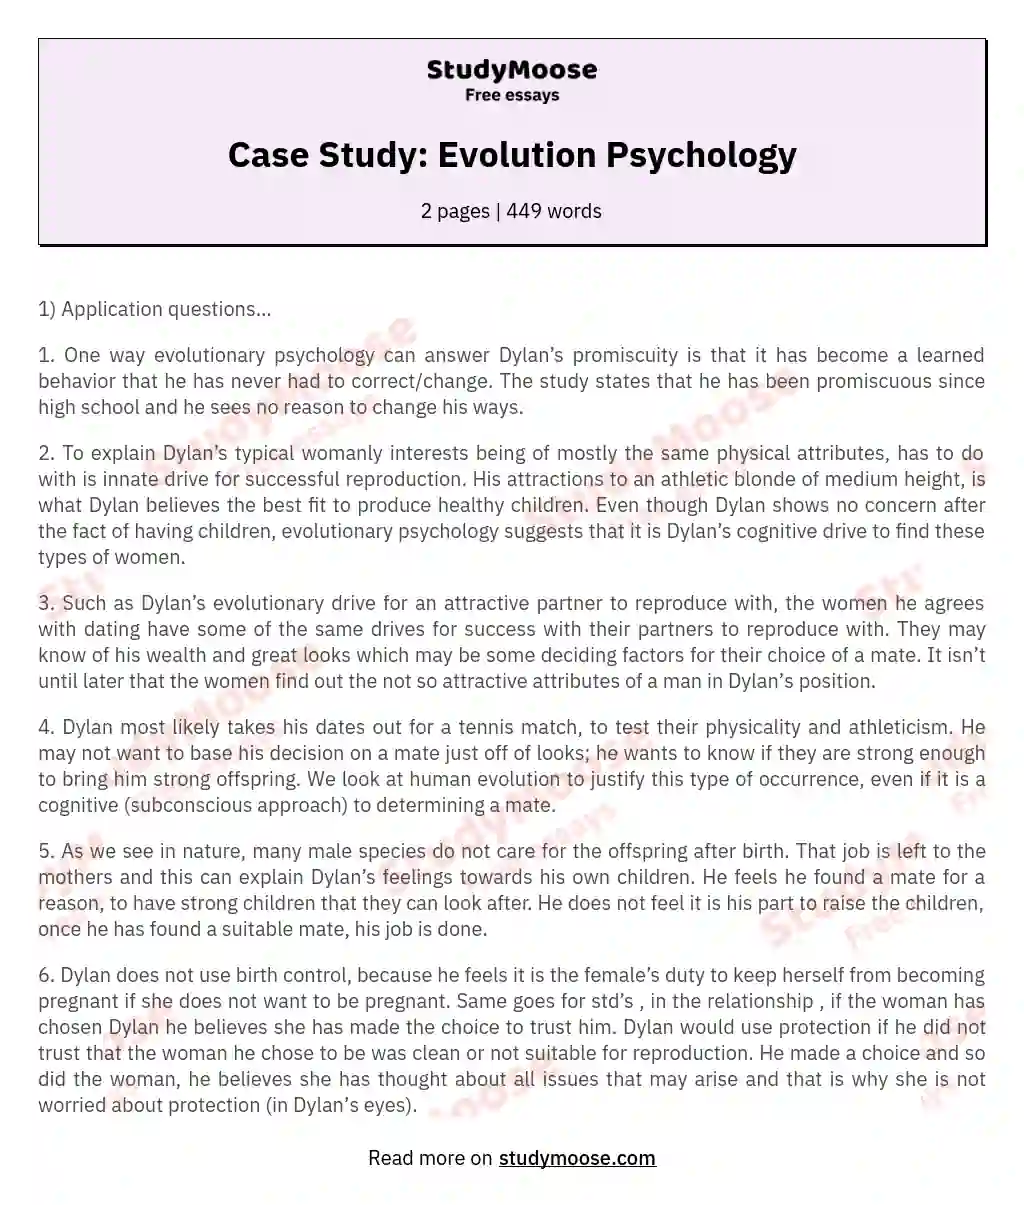 Case Study: Evolution Psychology essay